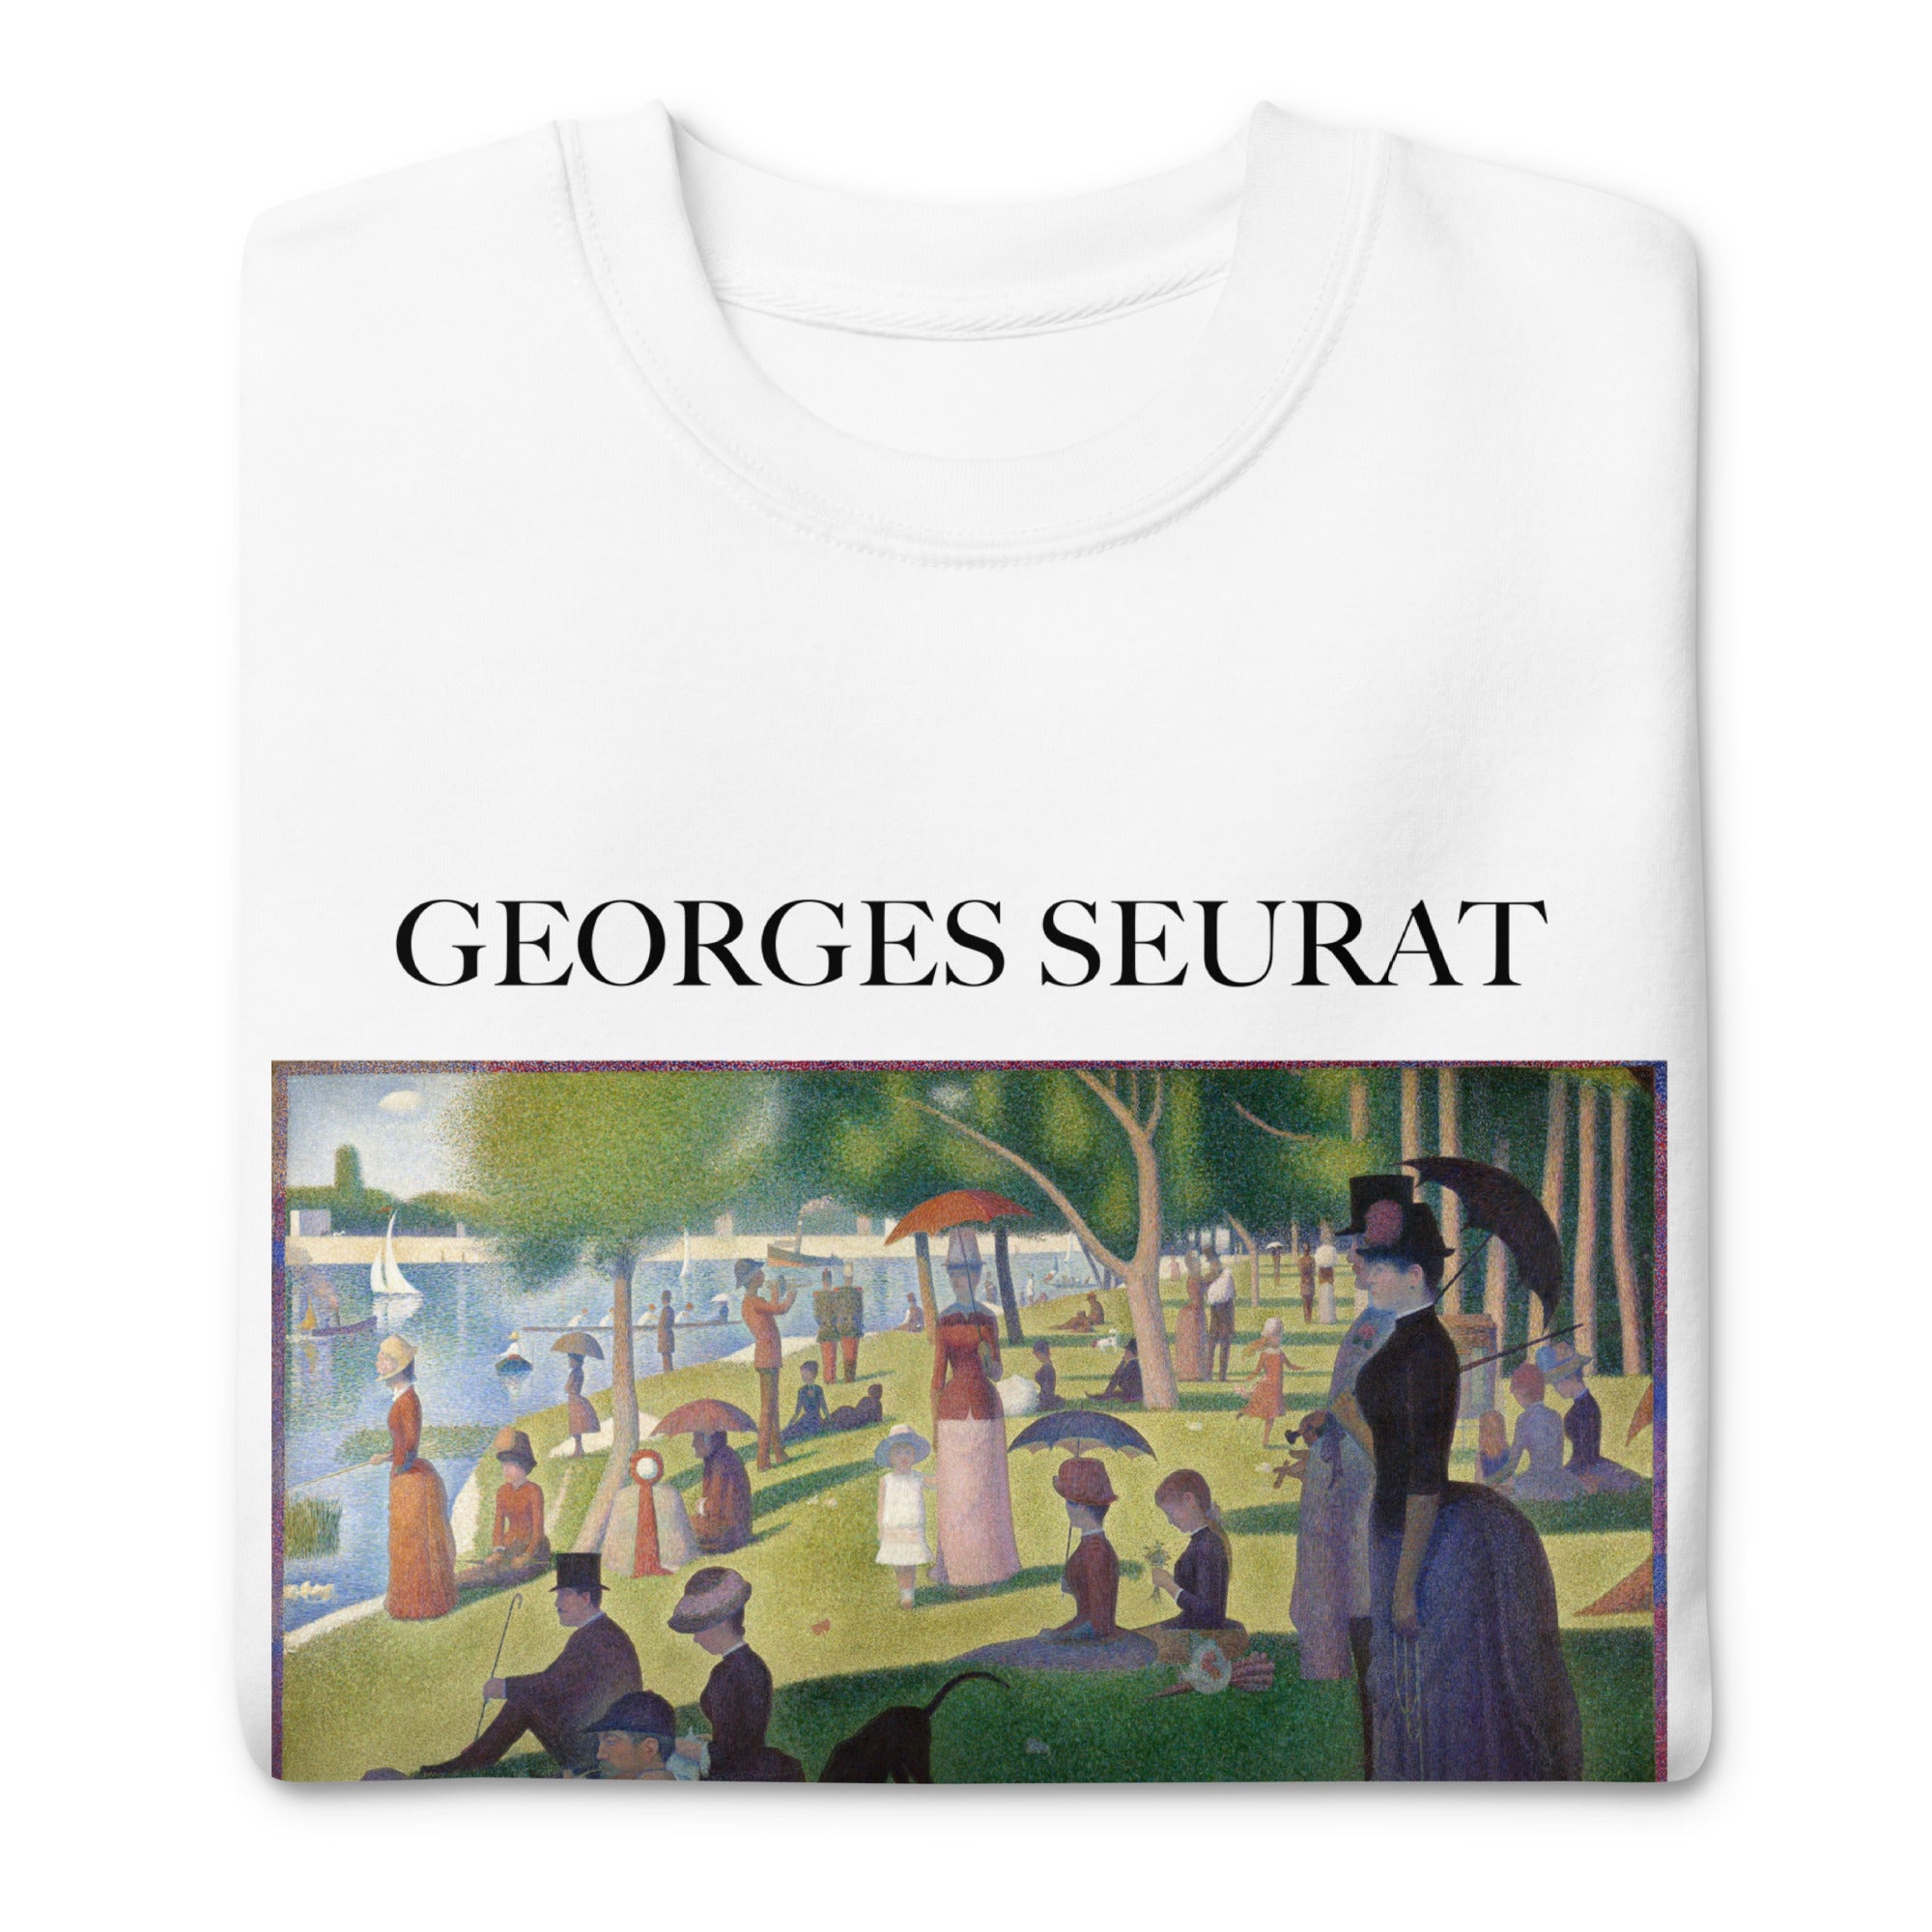 Georges Seurat 'A Sunday Afternoon on the Island of La Grande Jatte' Famous Painting Sweatshirt | Unisex Premium Sweatshirt